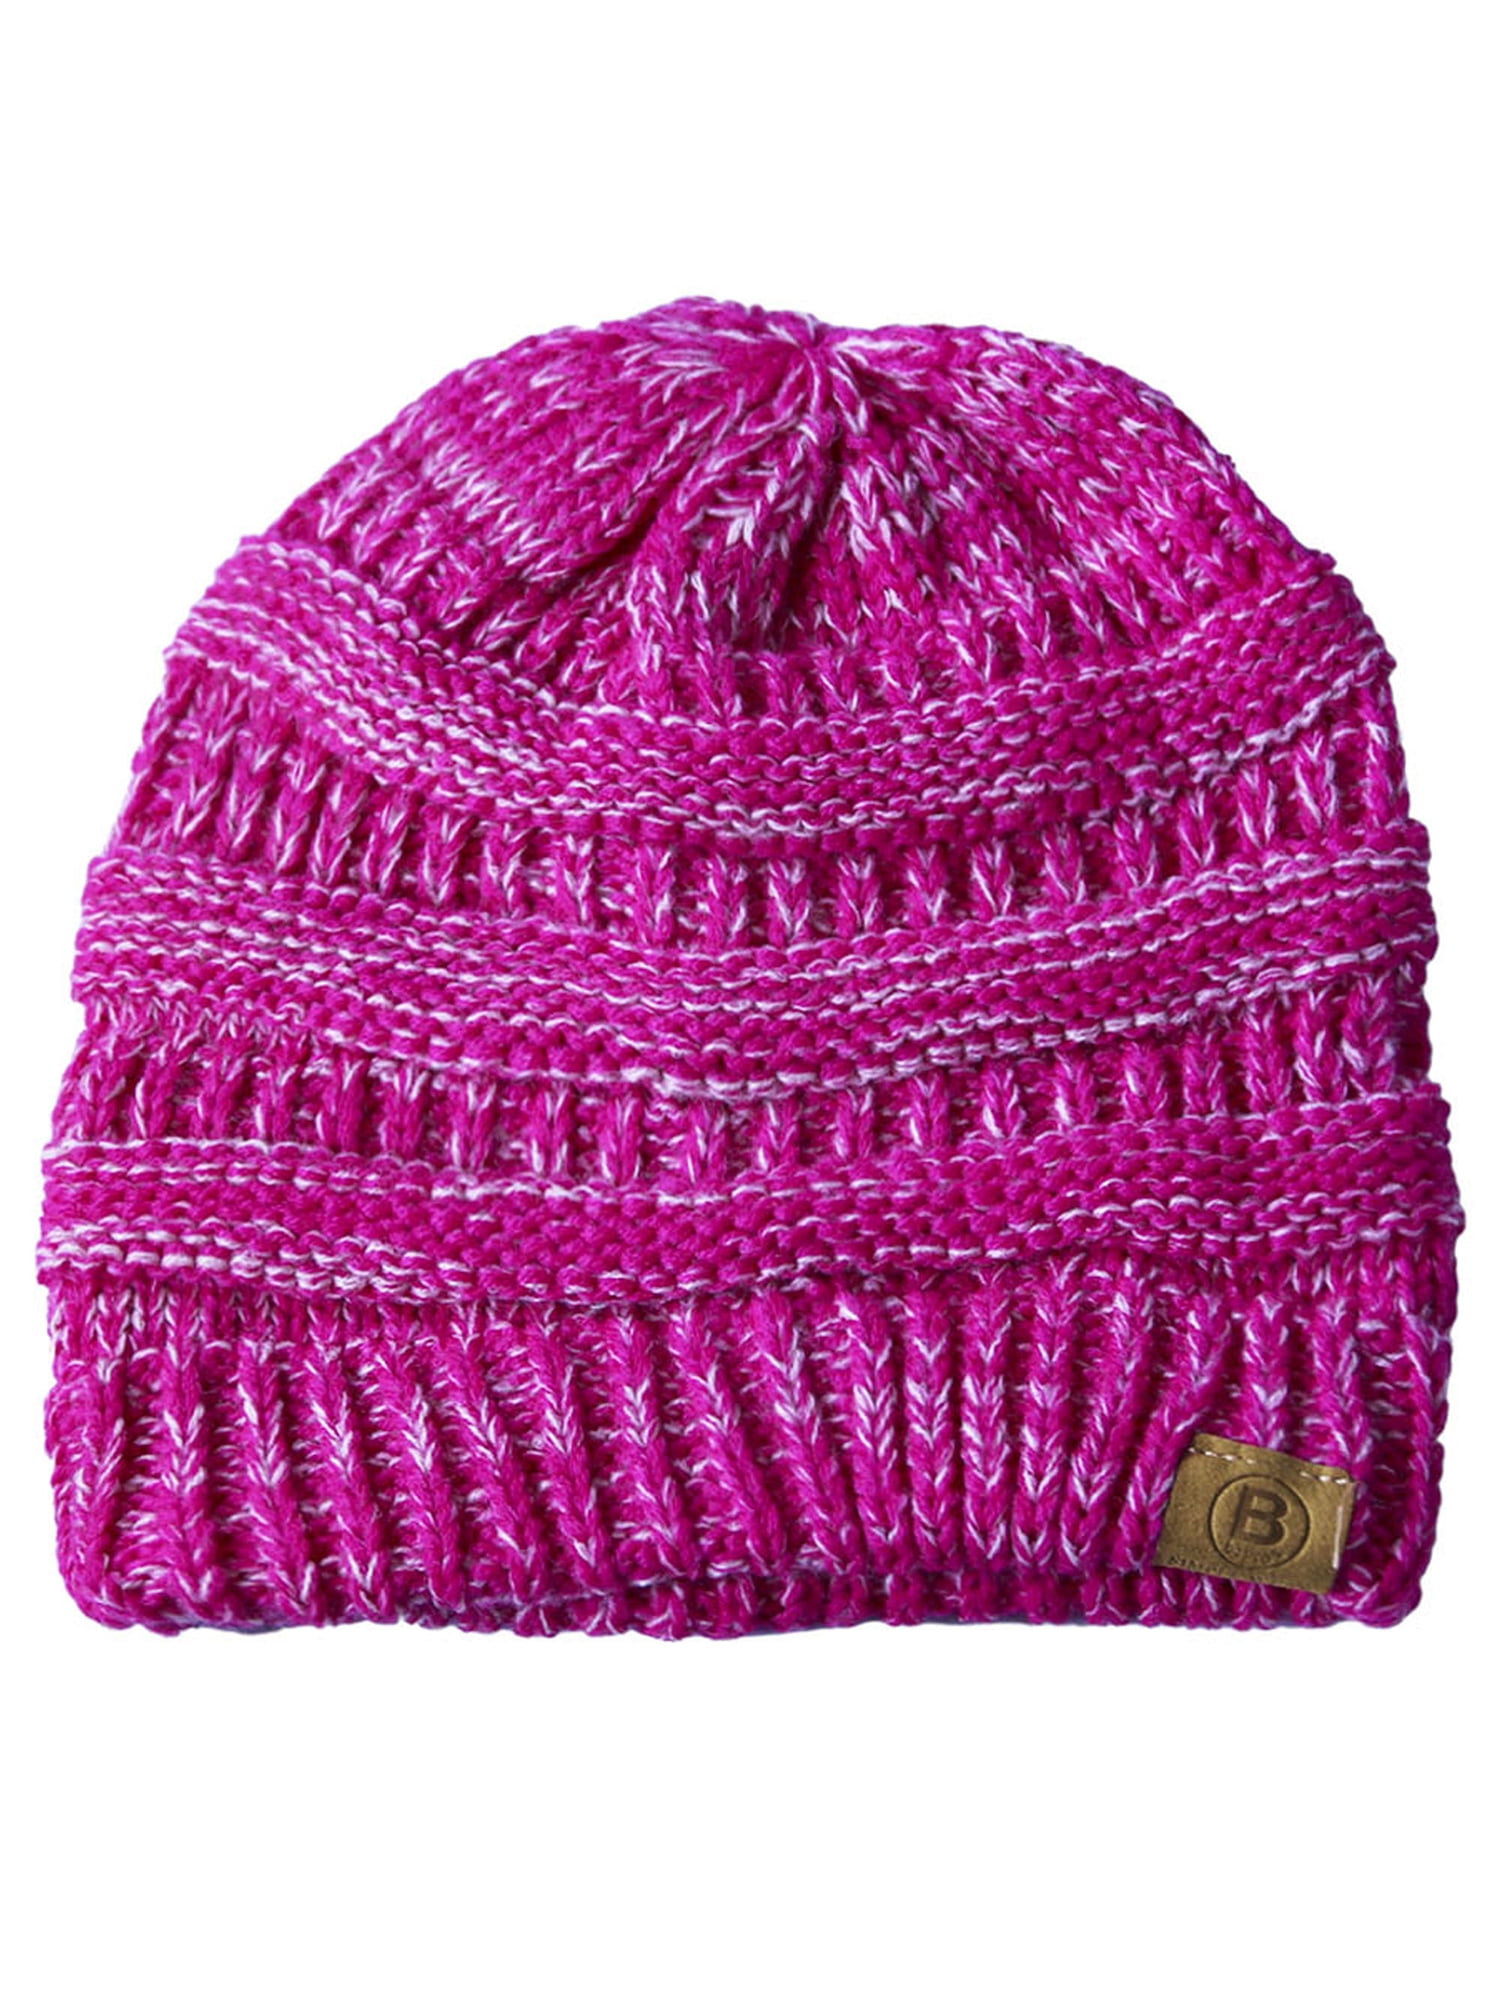 Boys Girls Knitted Soft Touch Gloves Thick Warmer Details about   Kids Winter Hat & Mitten Set 